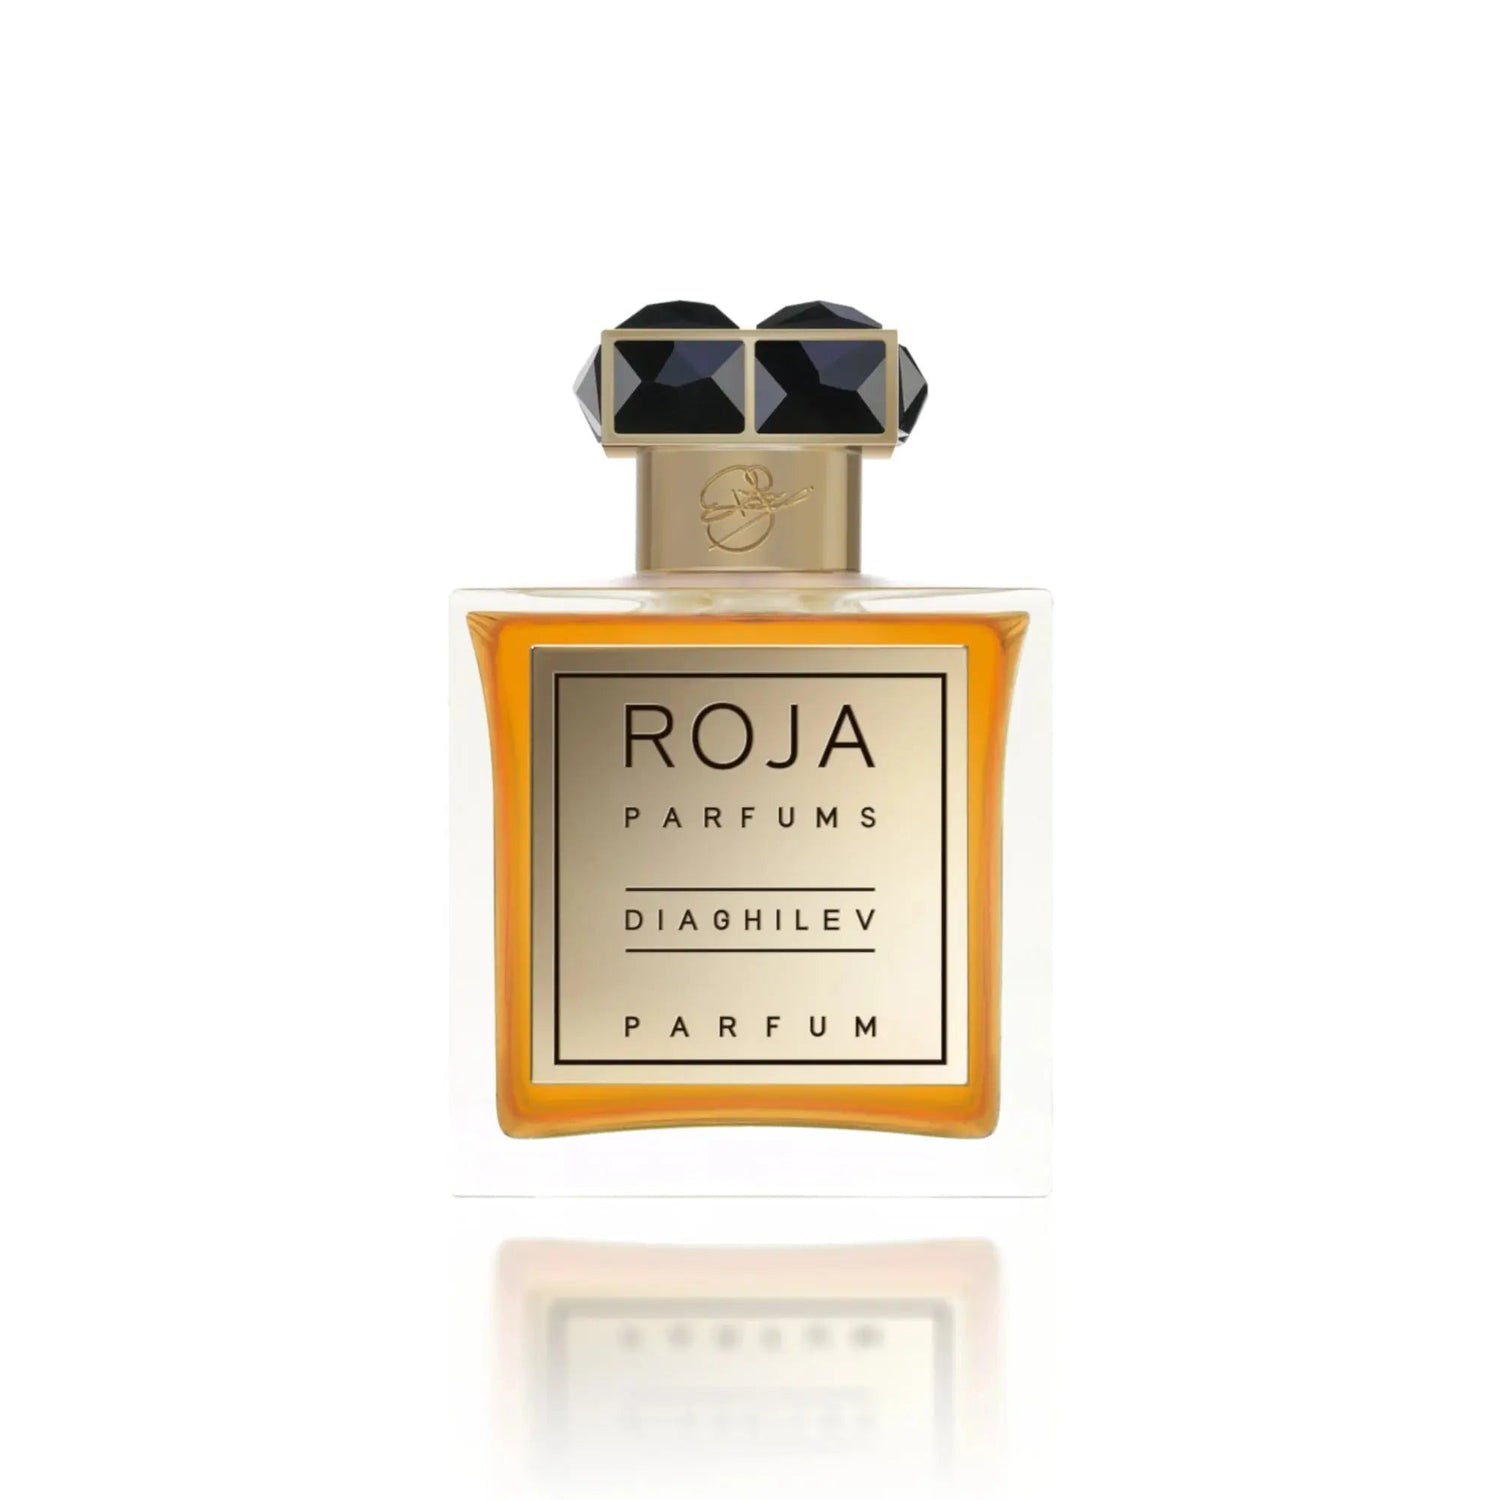 Diaghilev perfume Roja - 100 ml